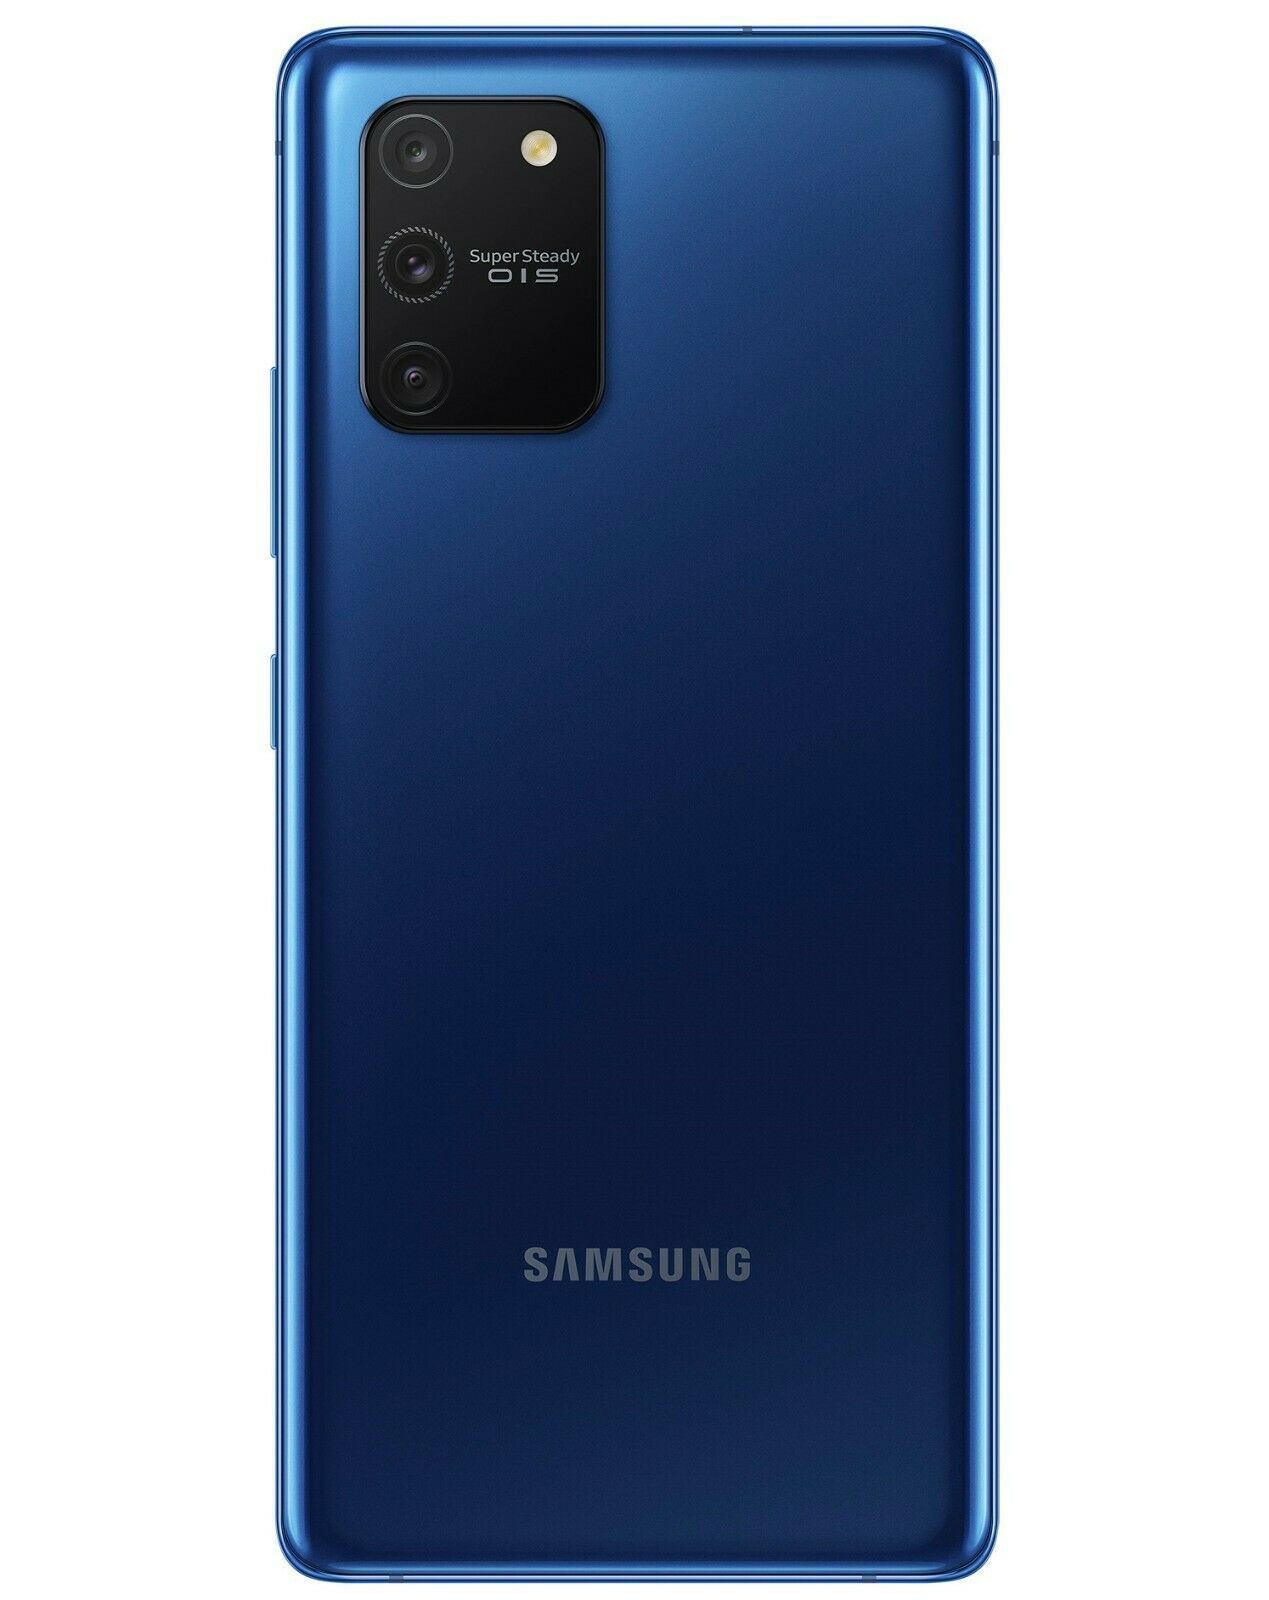 Buy SAMSUNG GALAXY S10 LITE SM-G770F 128GB PRISM BLUE - FACTORY